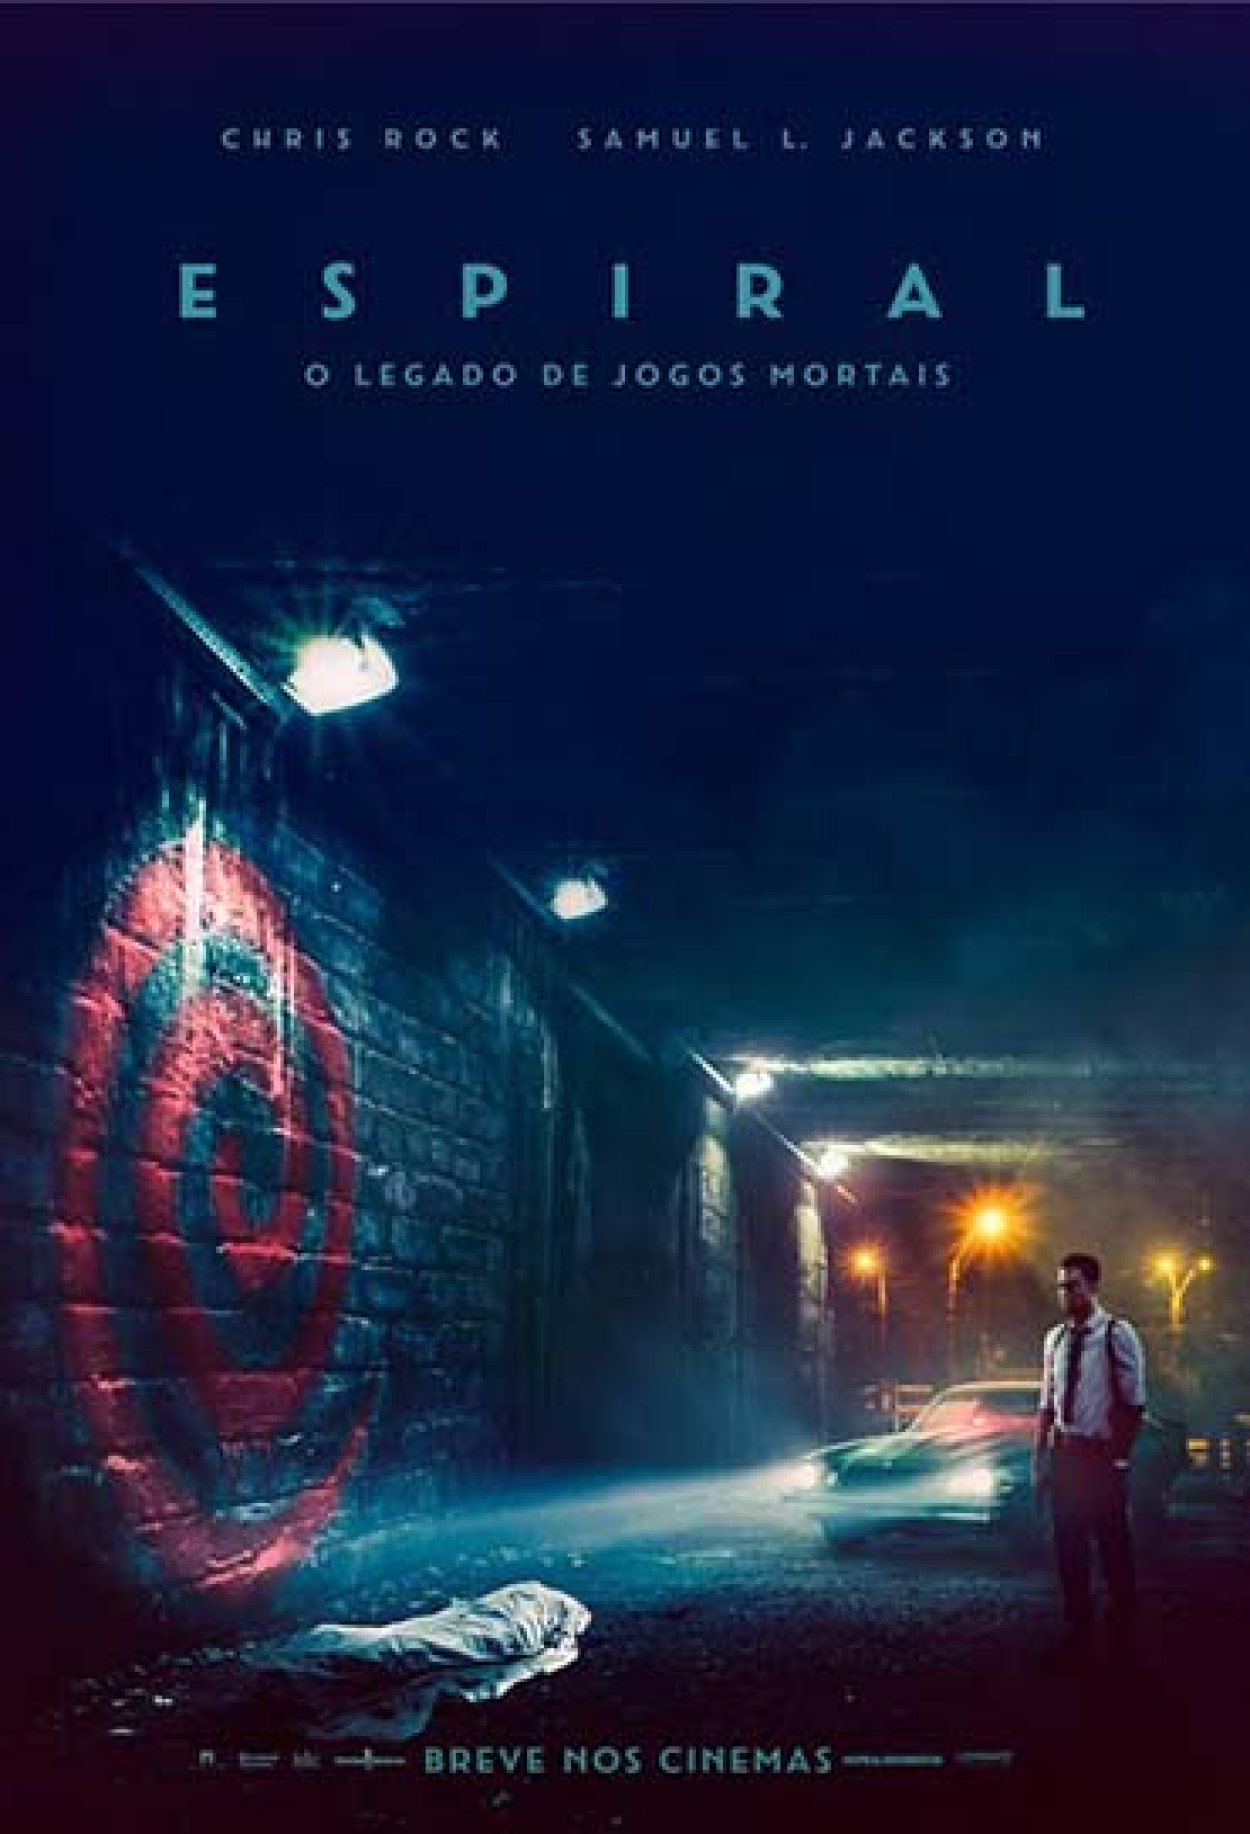 Trailer JOGOS MORTAIS 9 (2021), ANÁLISE COMPLETA